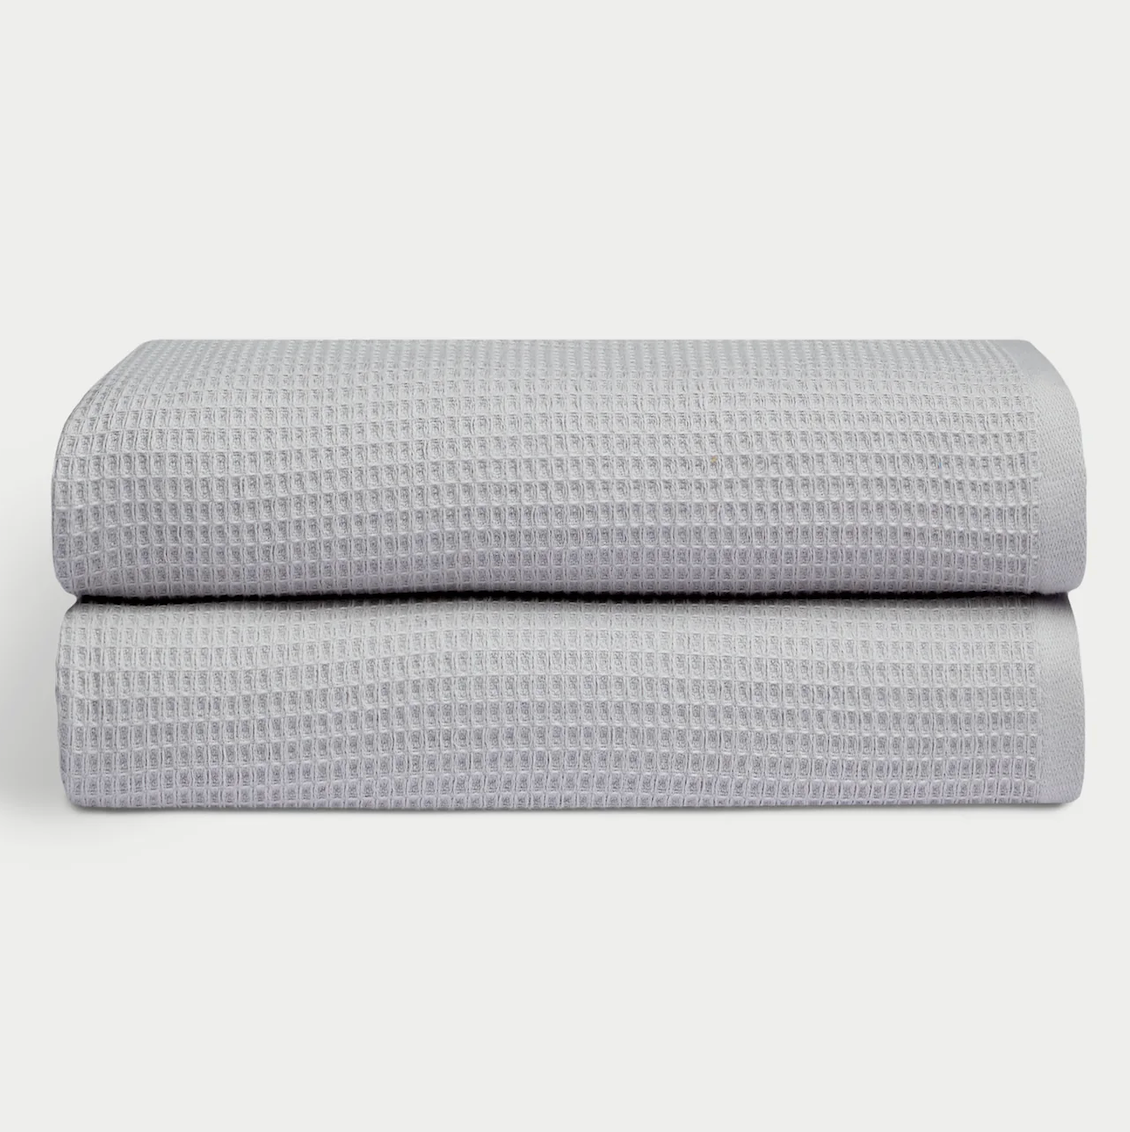 Best Quick Dry Towels: Brooklinen, Parachute, Macy's